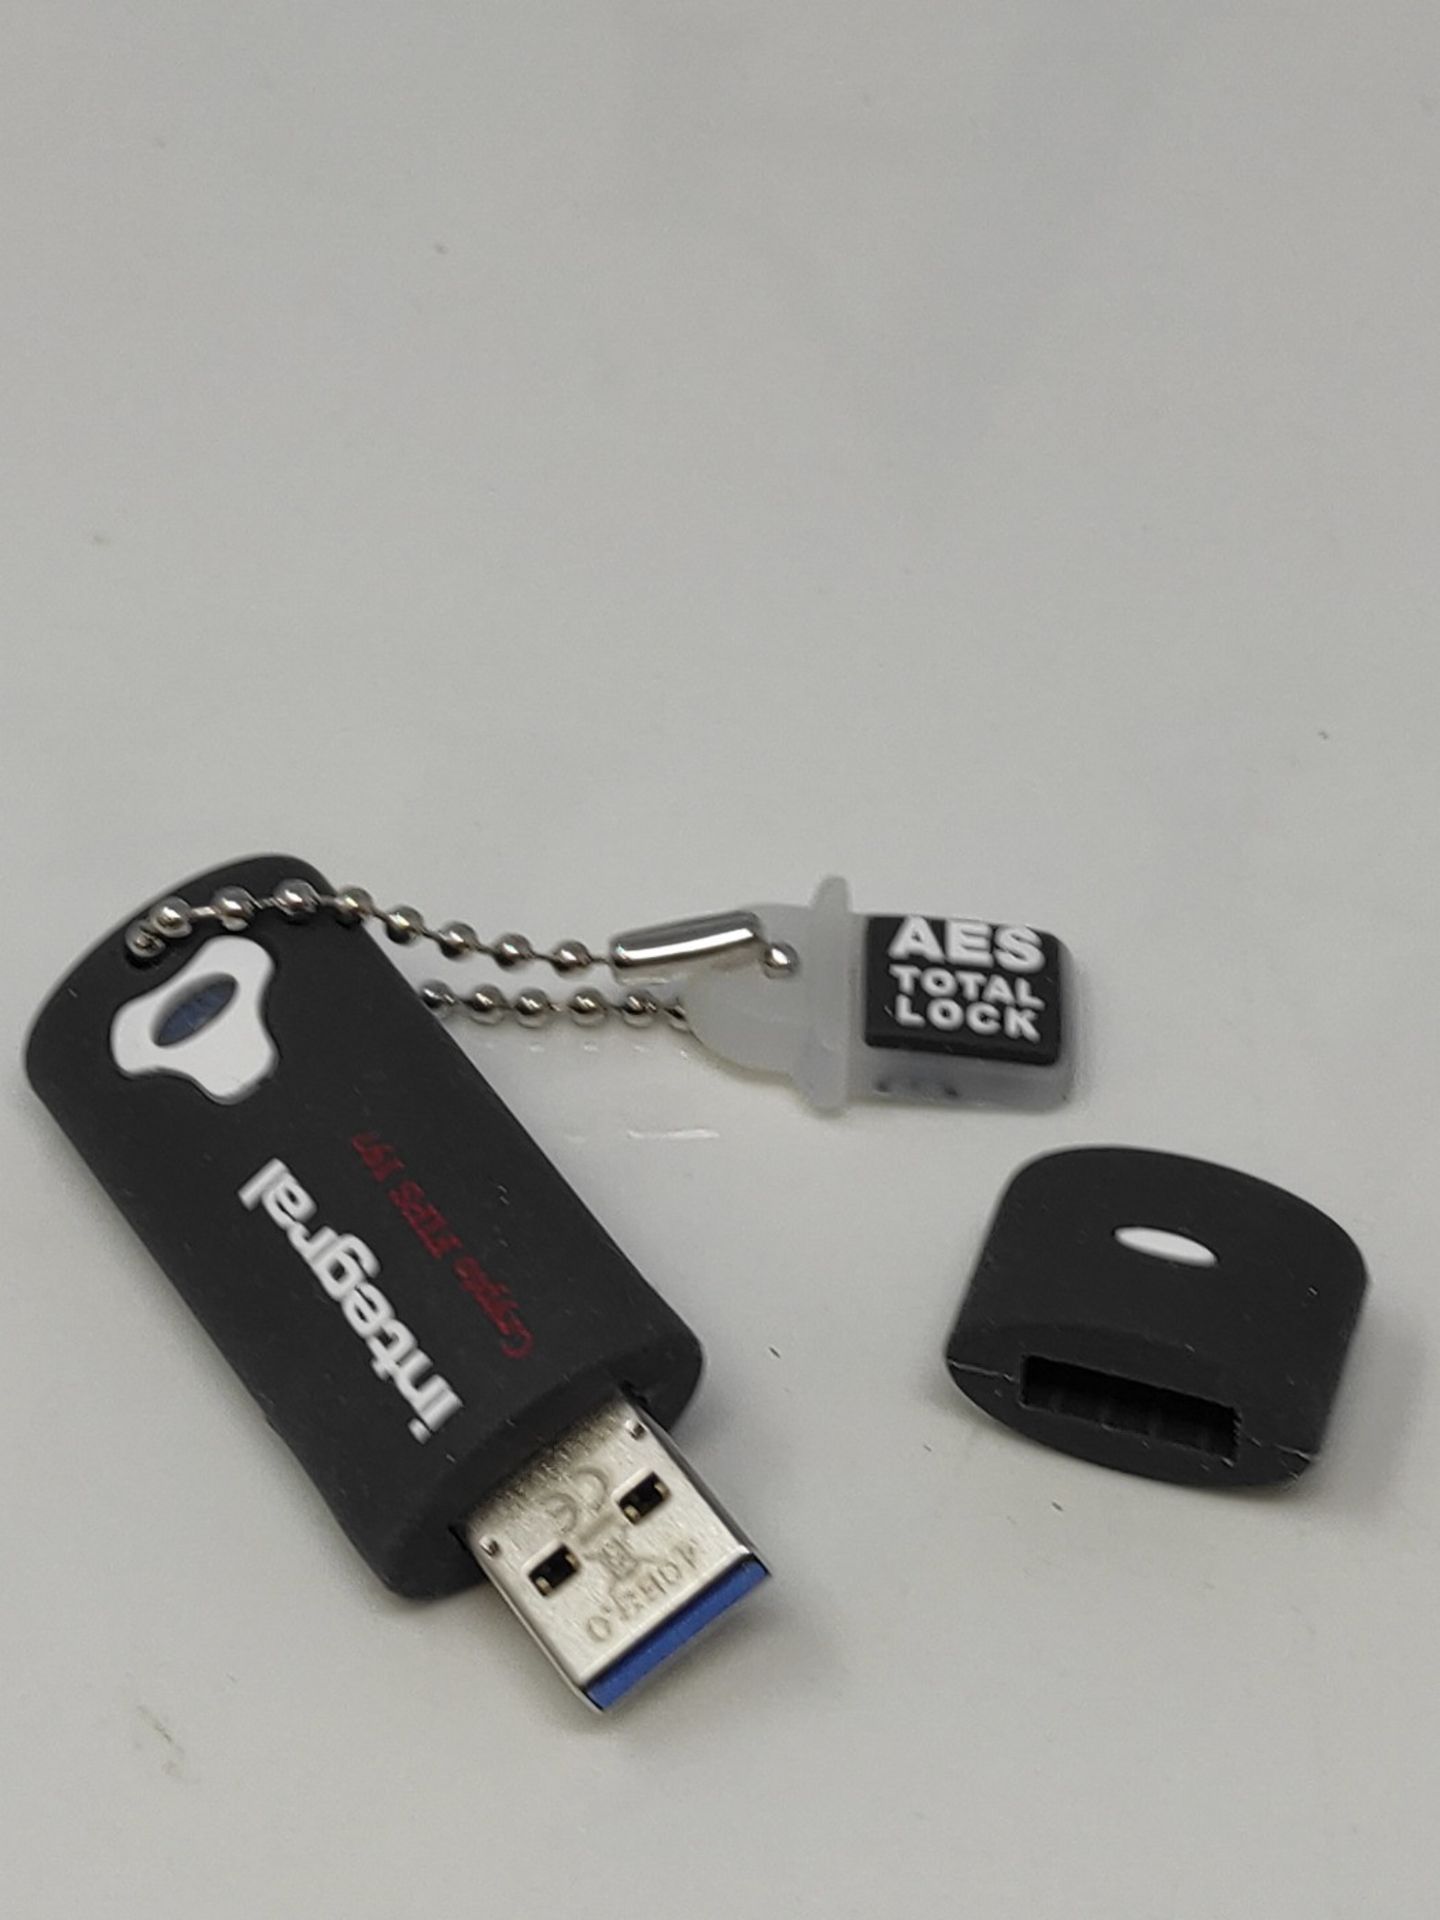 Integral 4GB Crypto-197 256-Bit 3.0 USB Stick encrypted - USB stick password protected